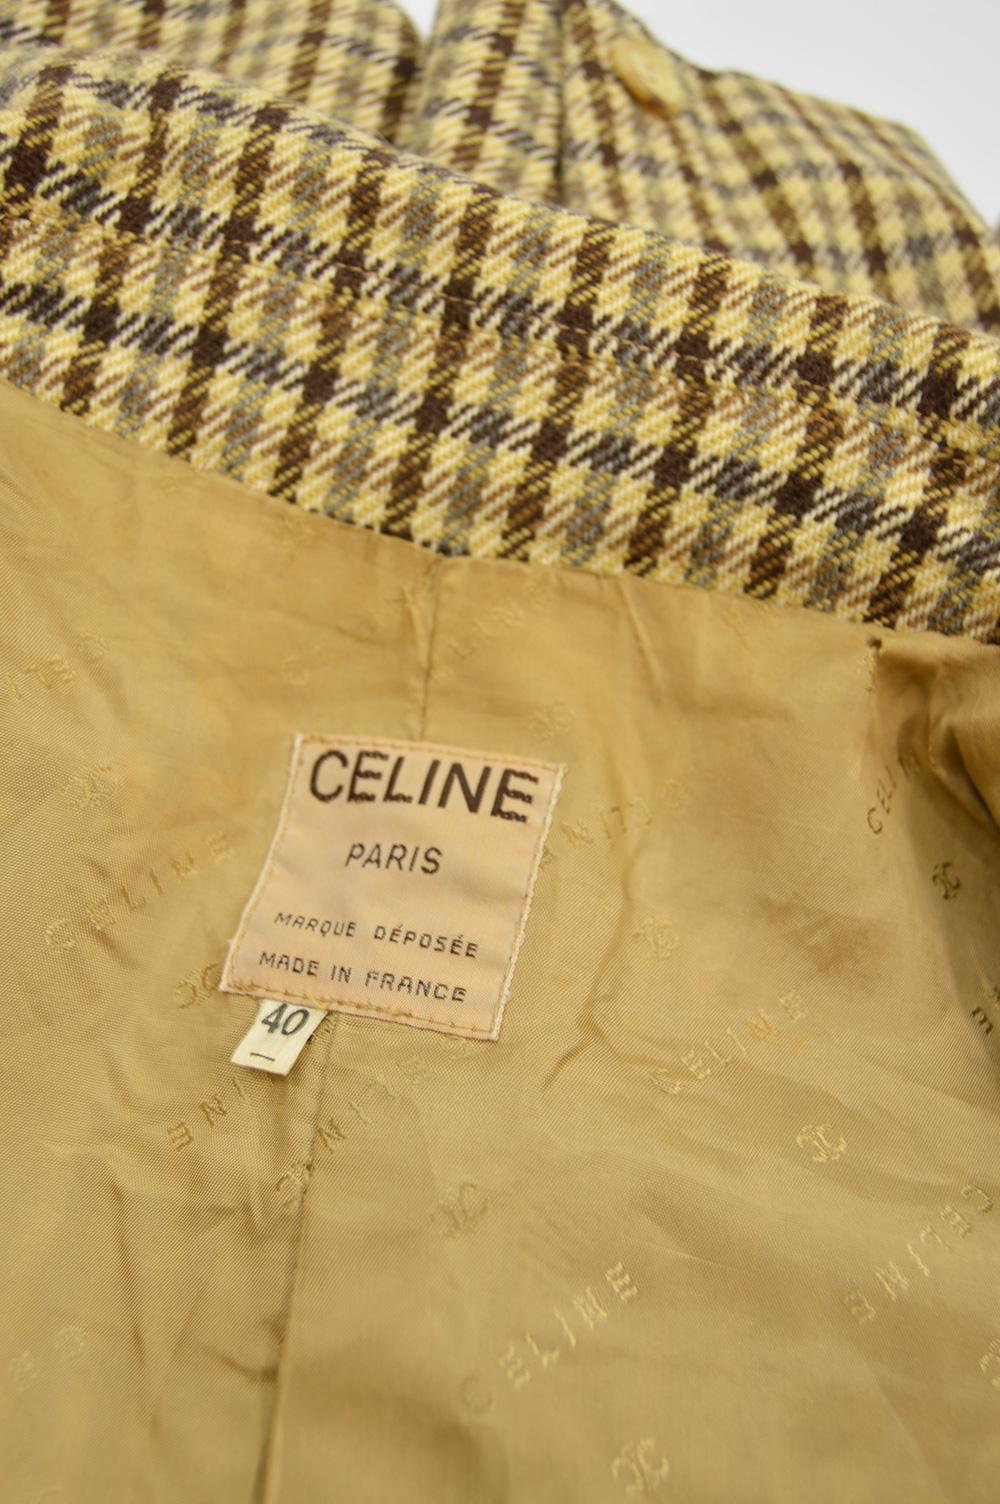 Celine Vintage Women's Wool & Leather Checked Wool Jacket, c. 1970s 1